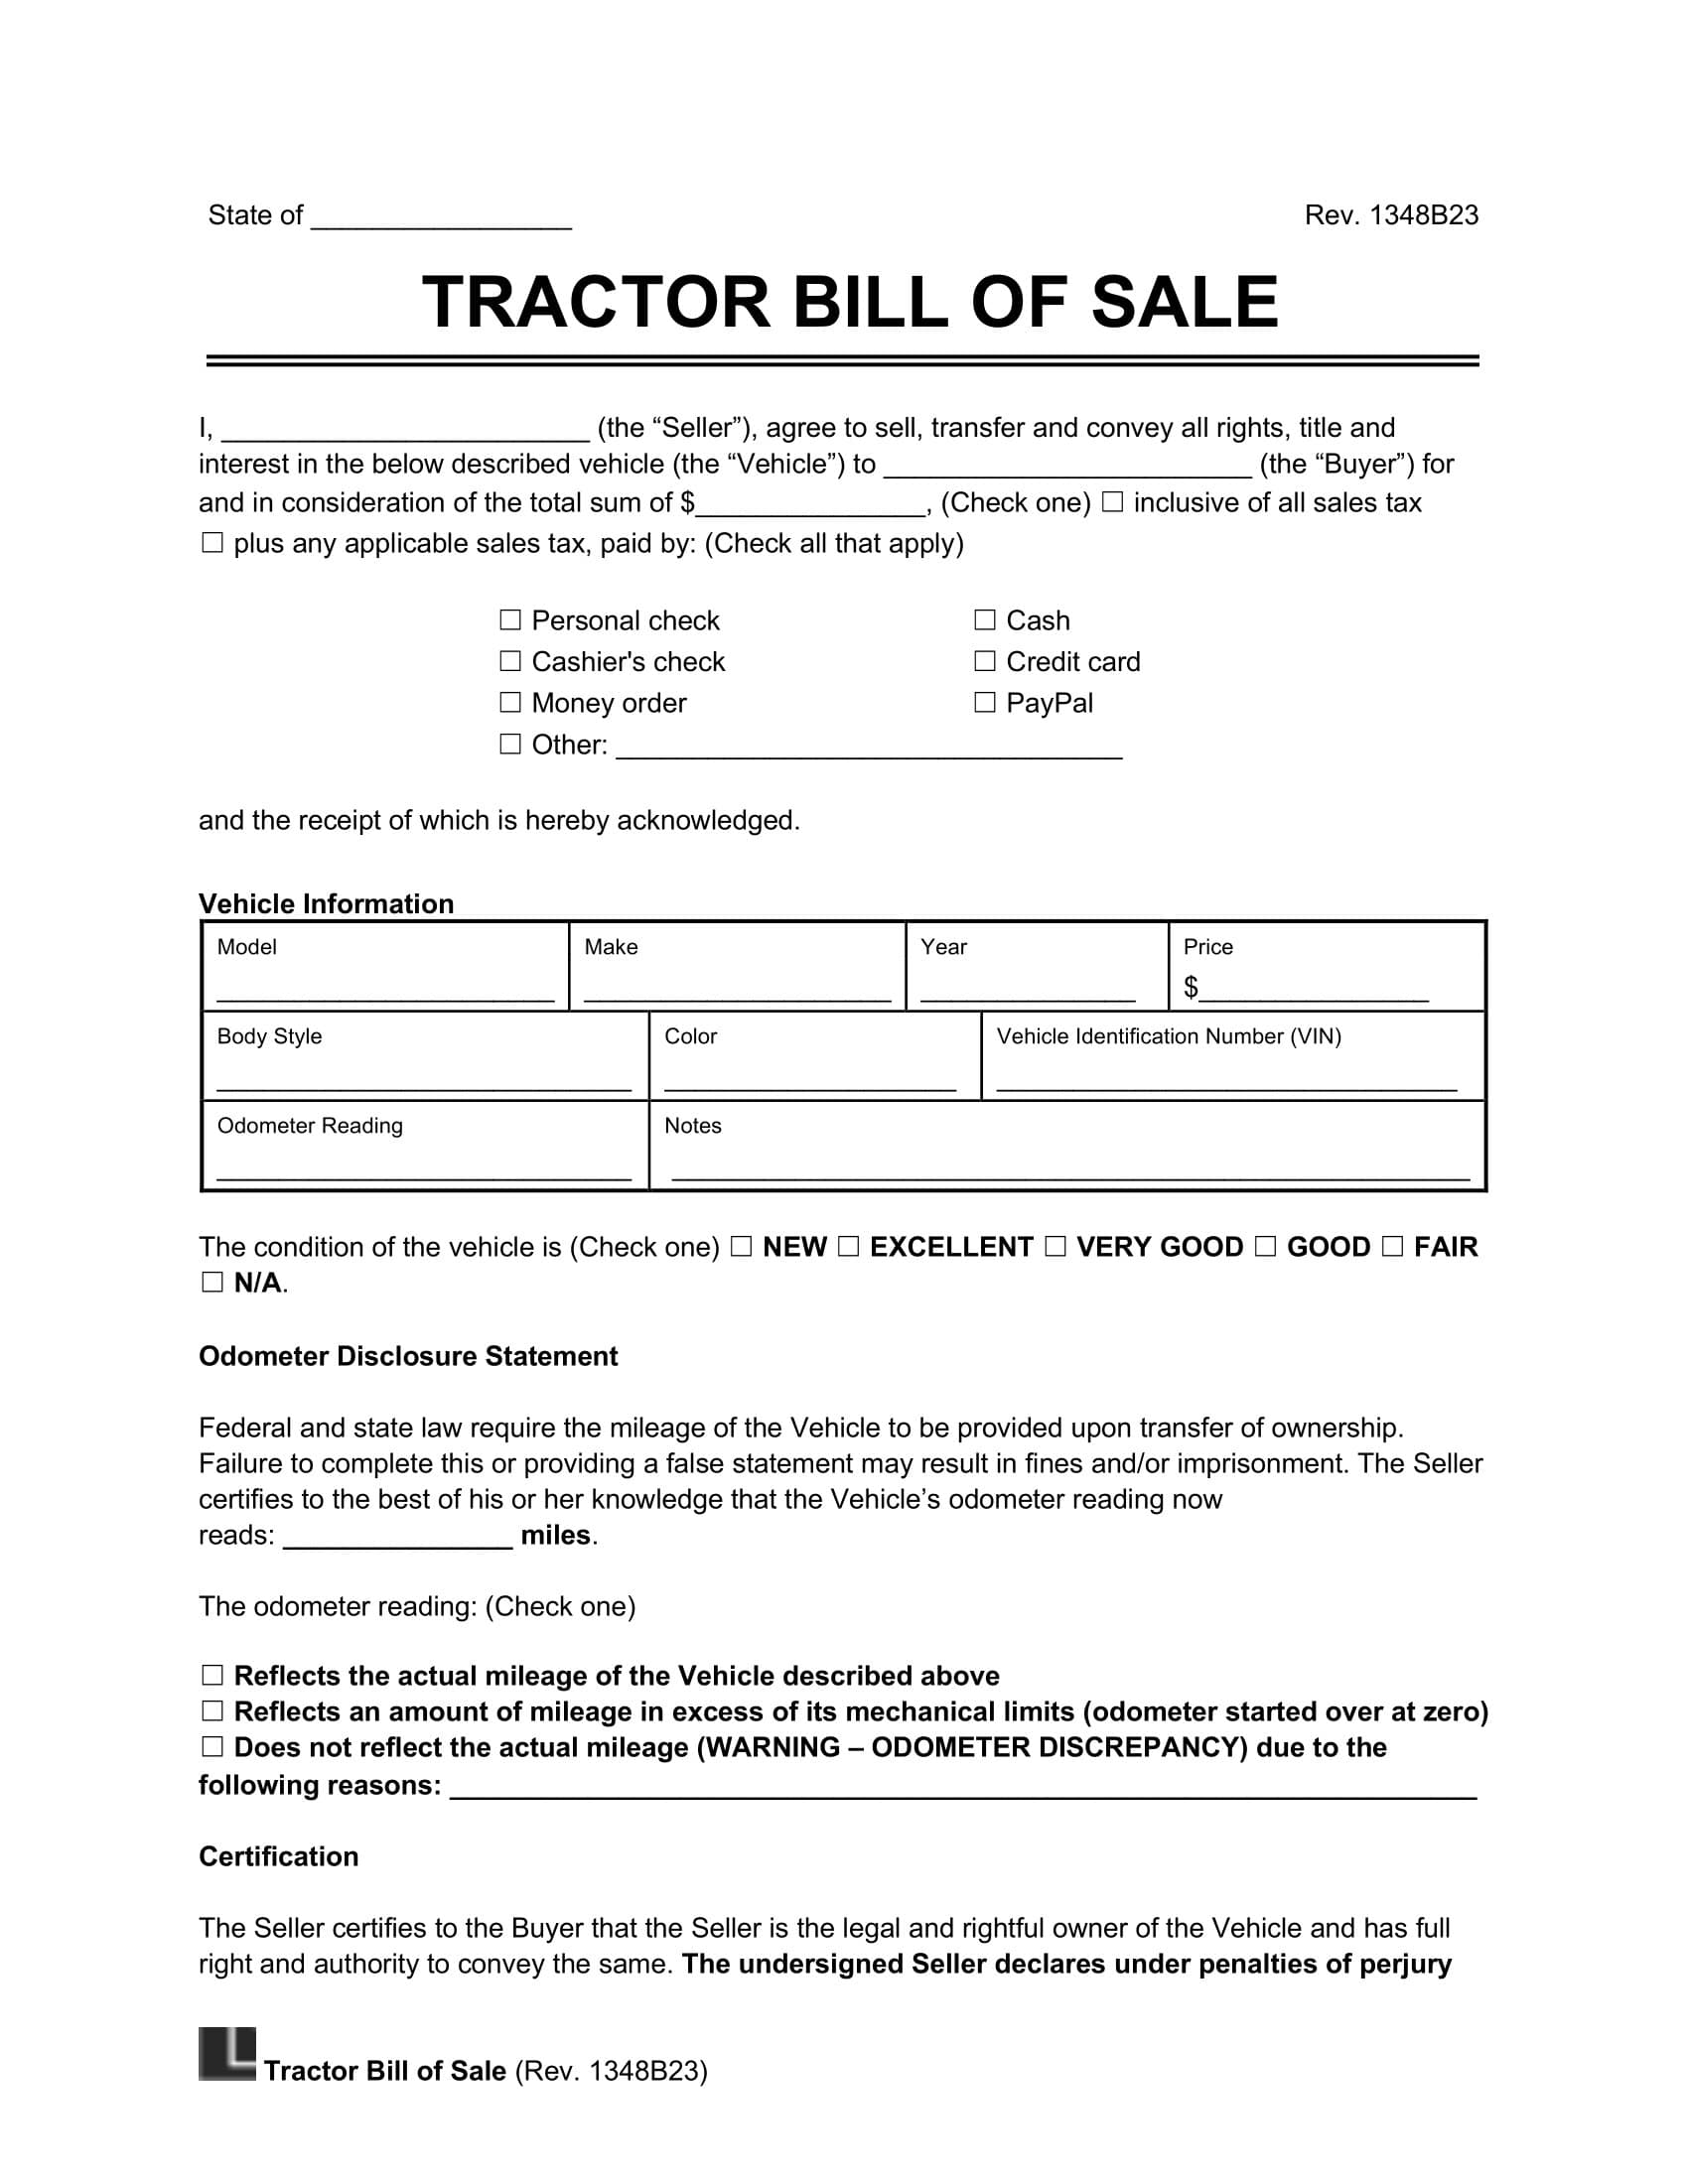 Tractor Bill of Sale screenshot